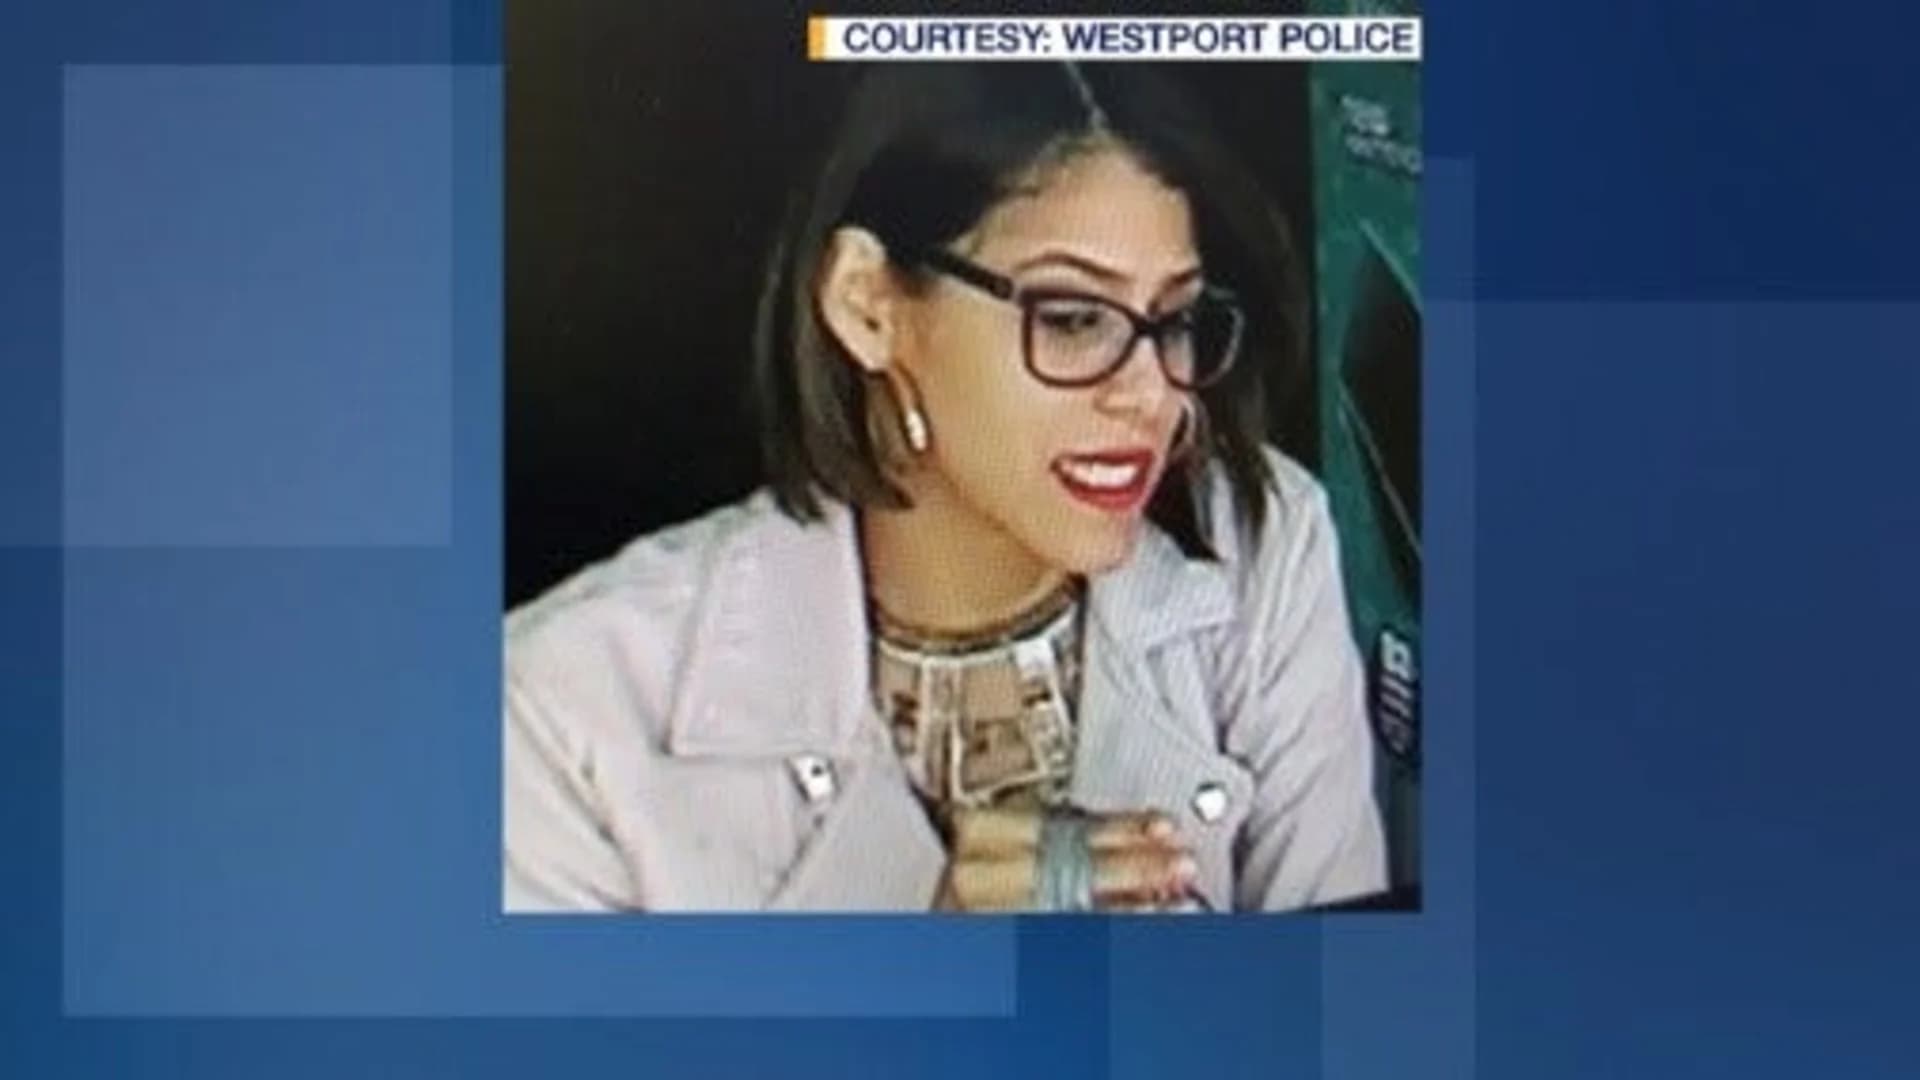 Westport police seek woman wanted for questioning